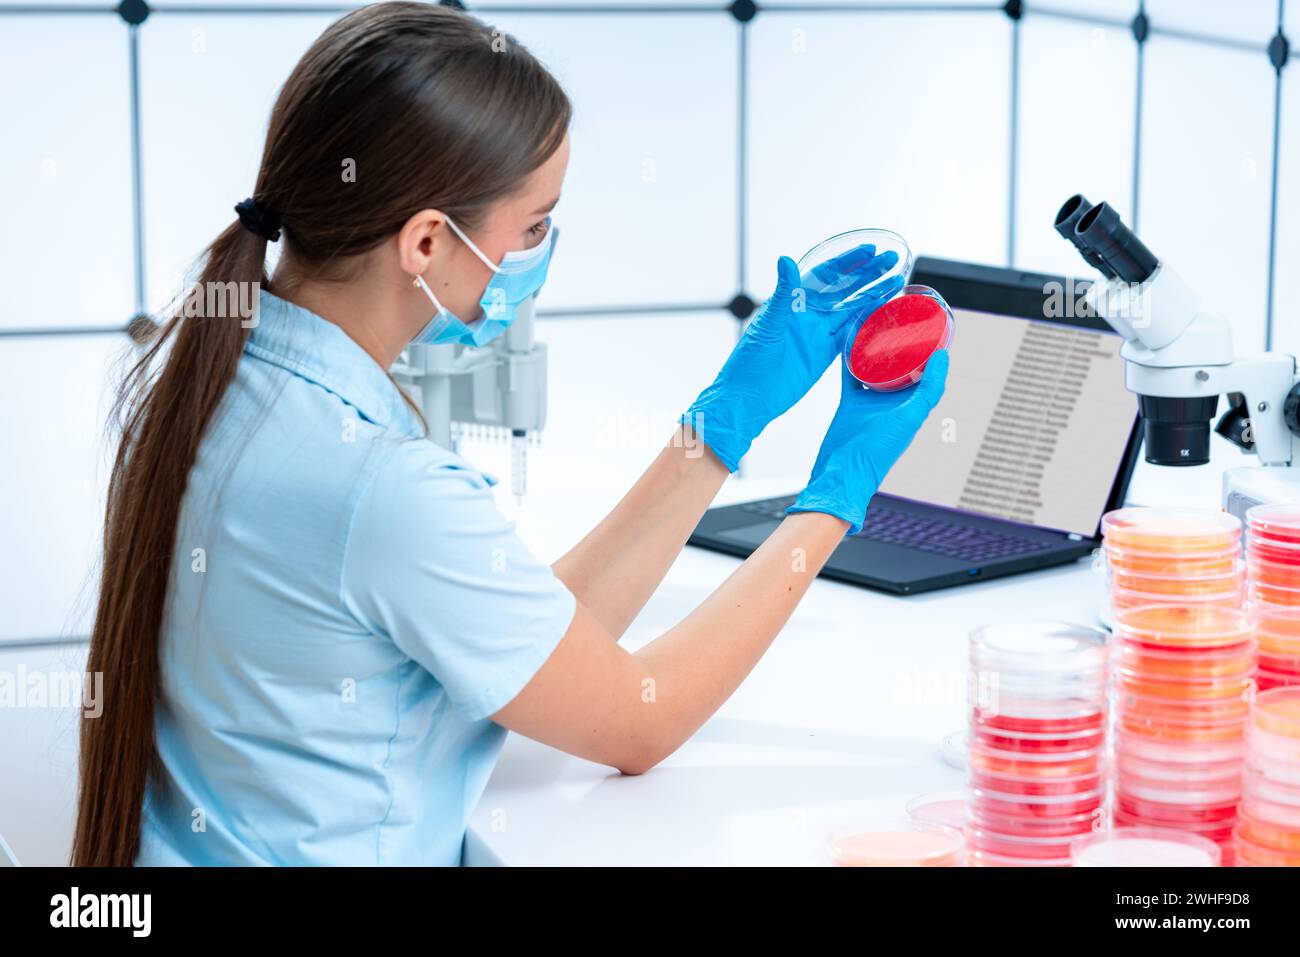 Scientist examining petri dish Stock Photo